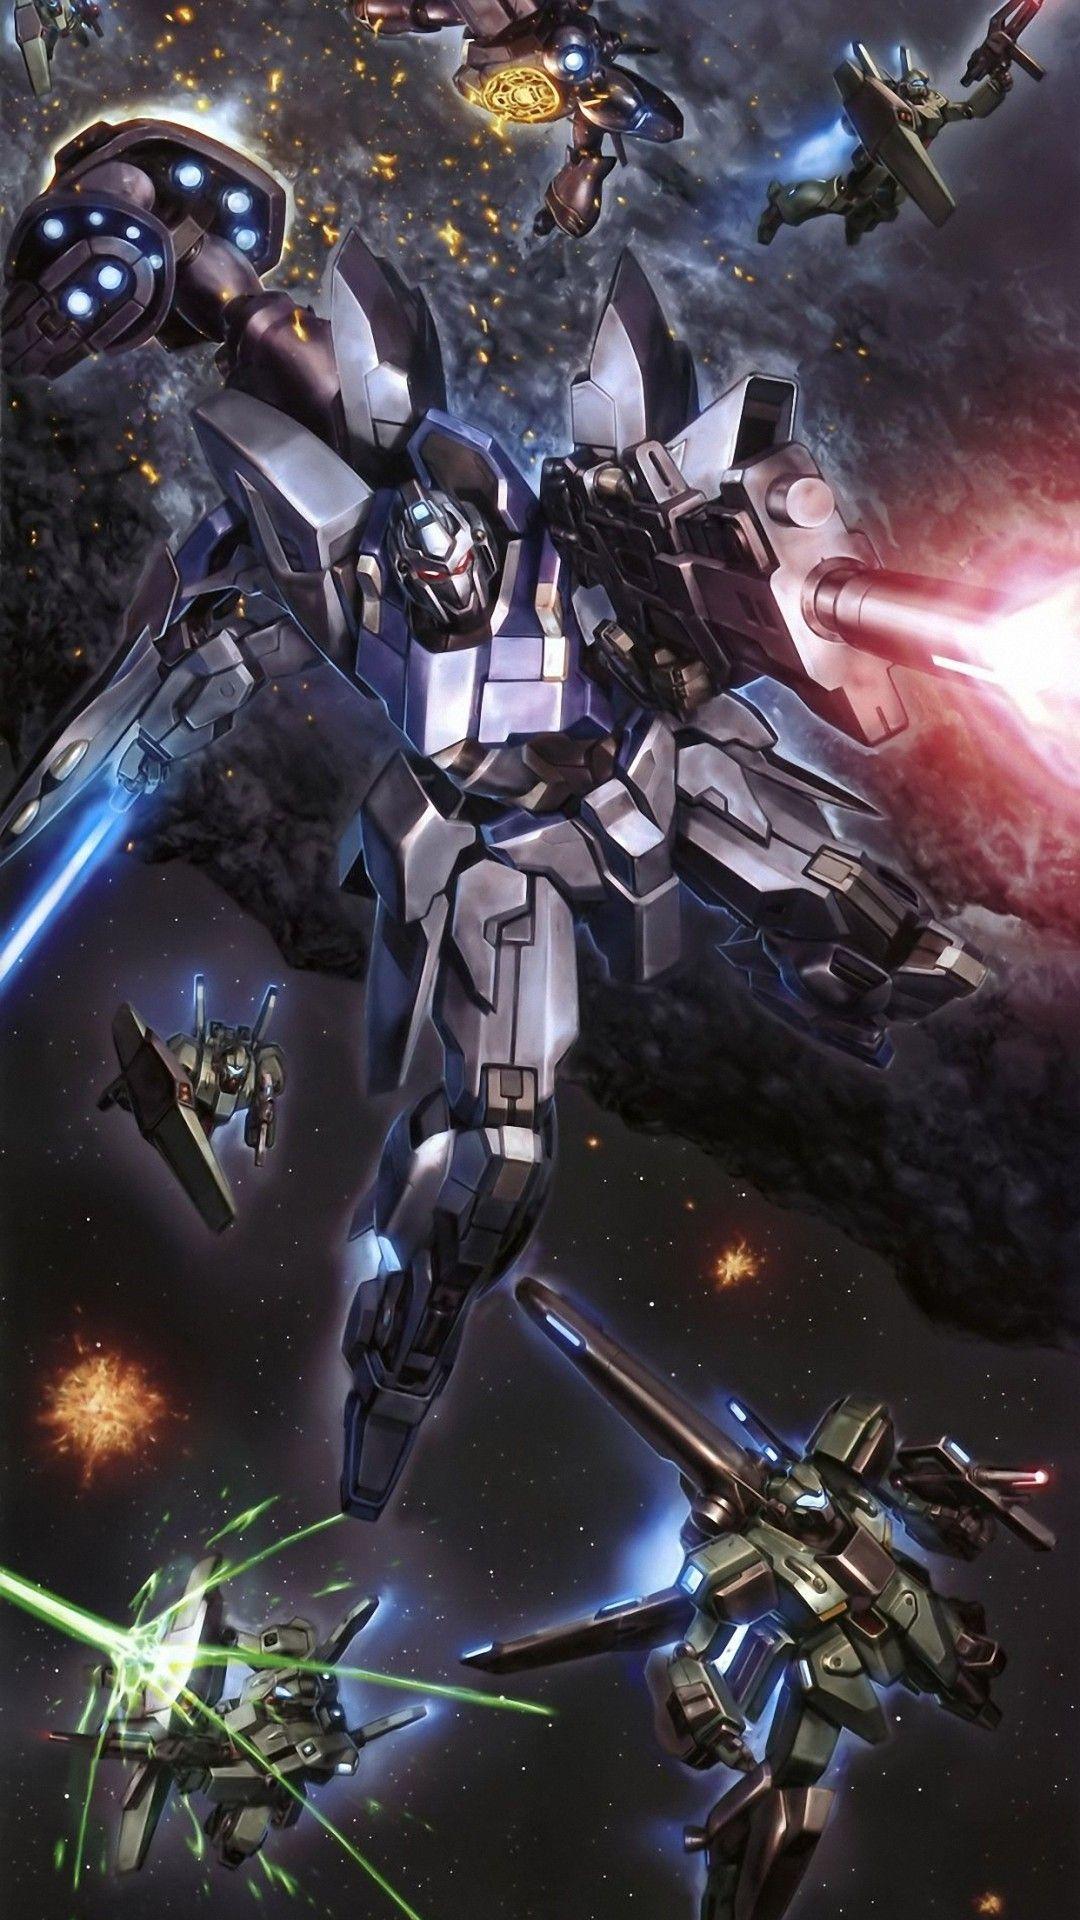 Gundam IPhone Wallpaper 67 images